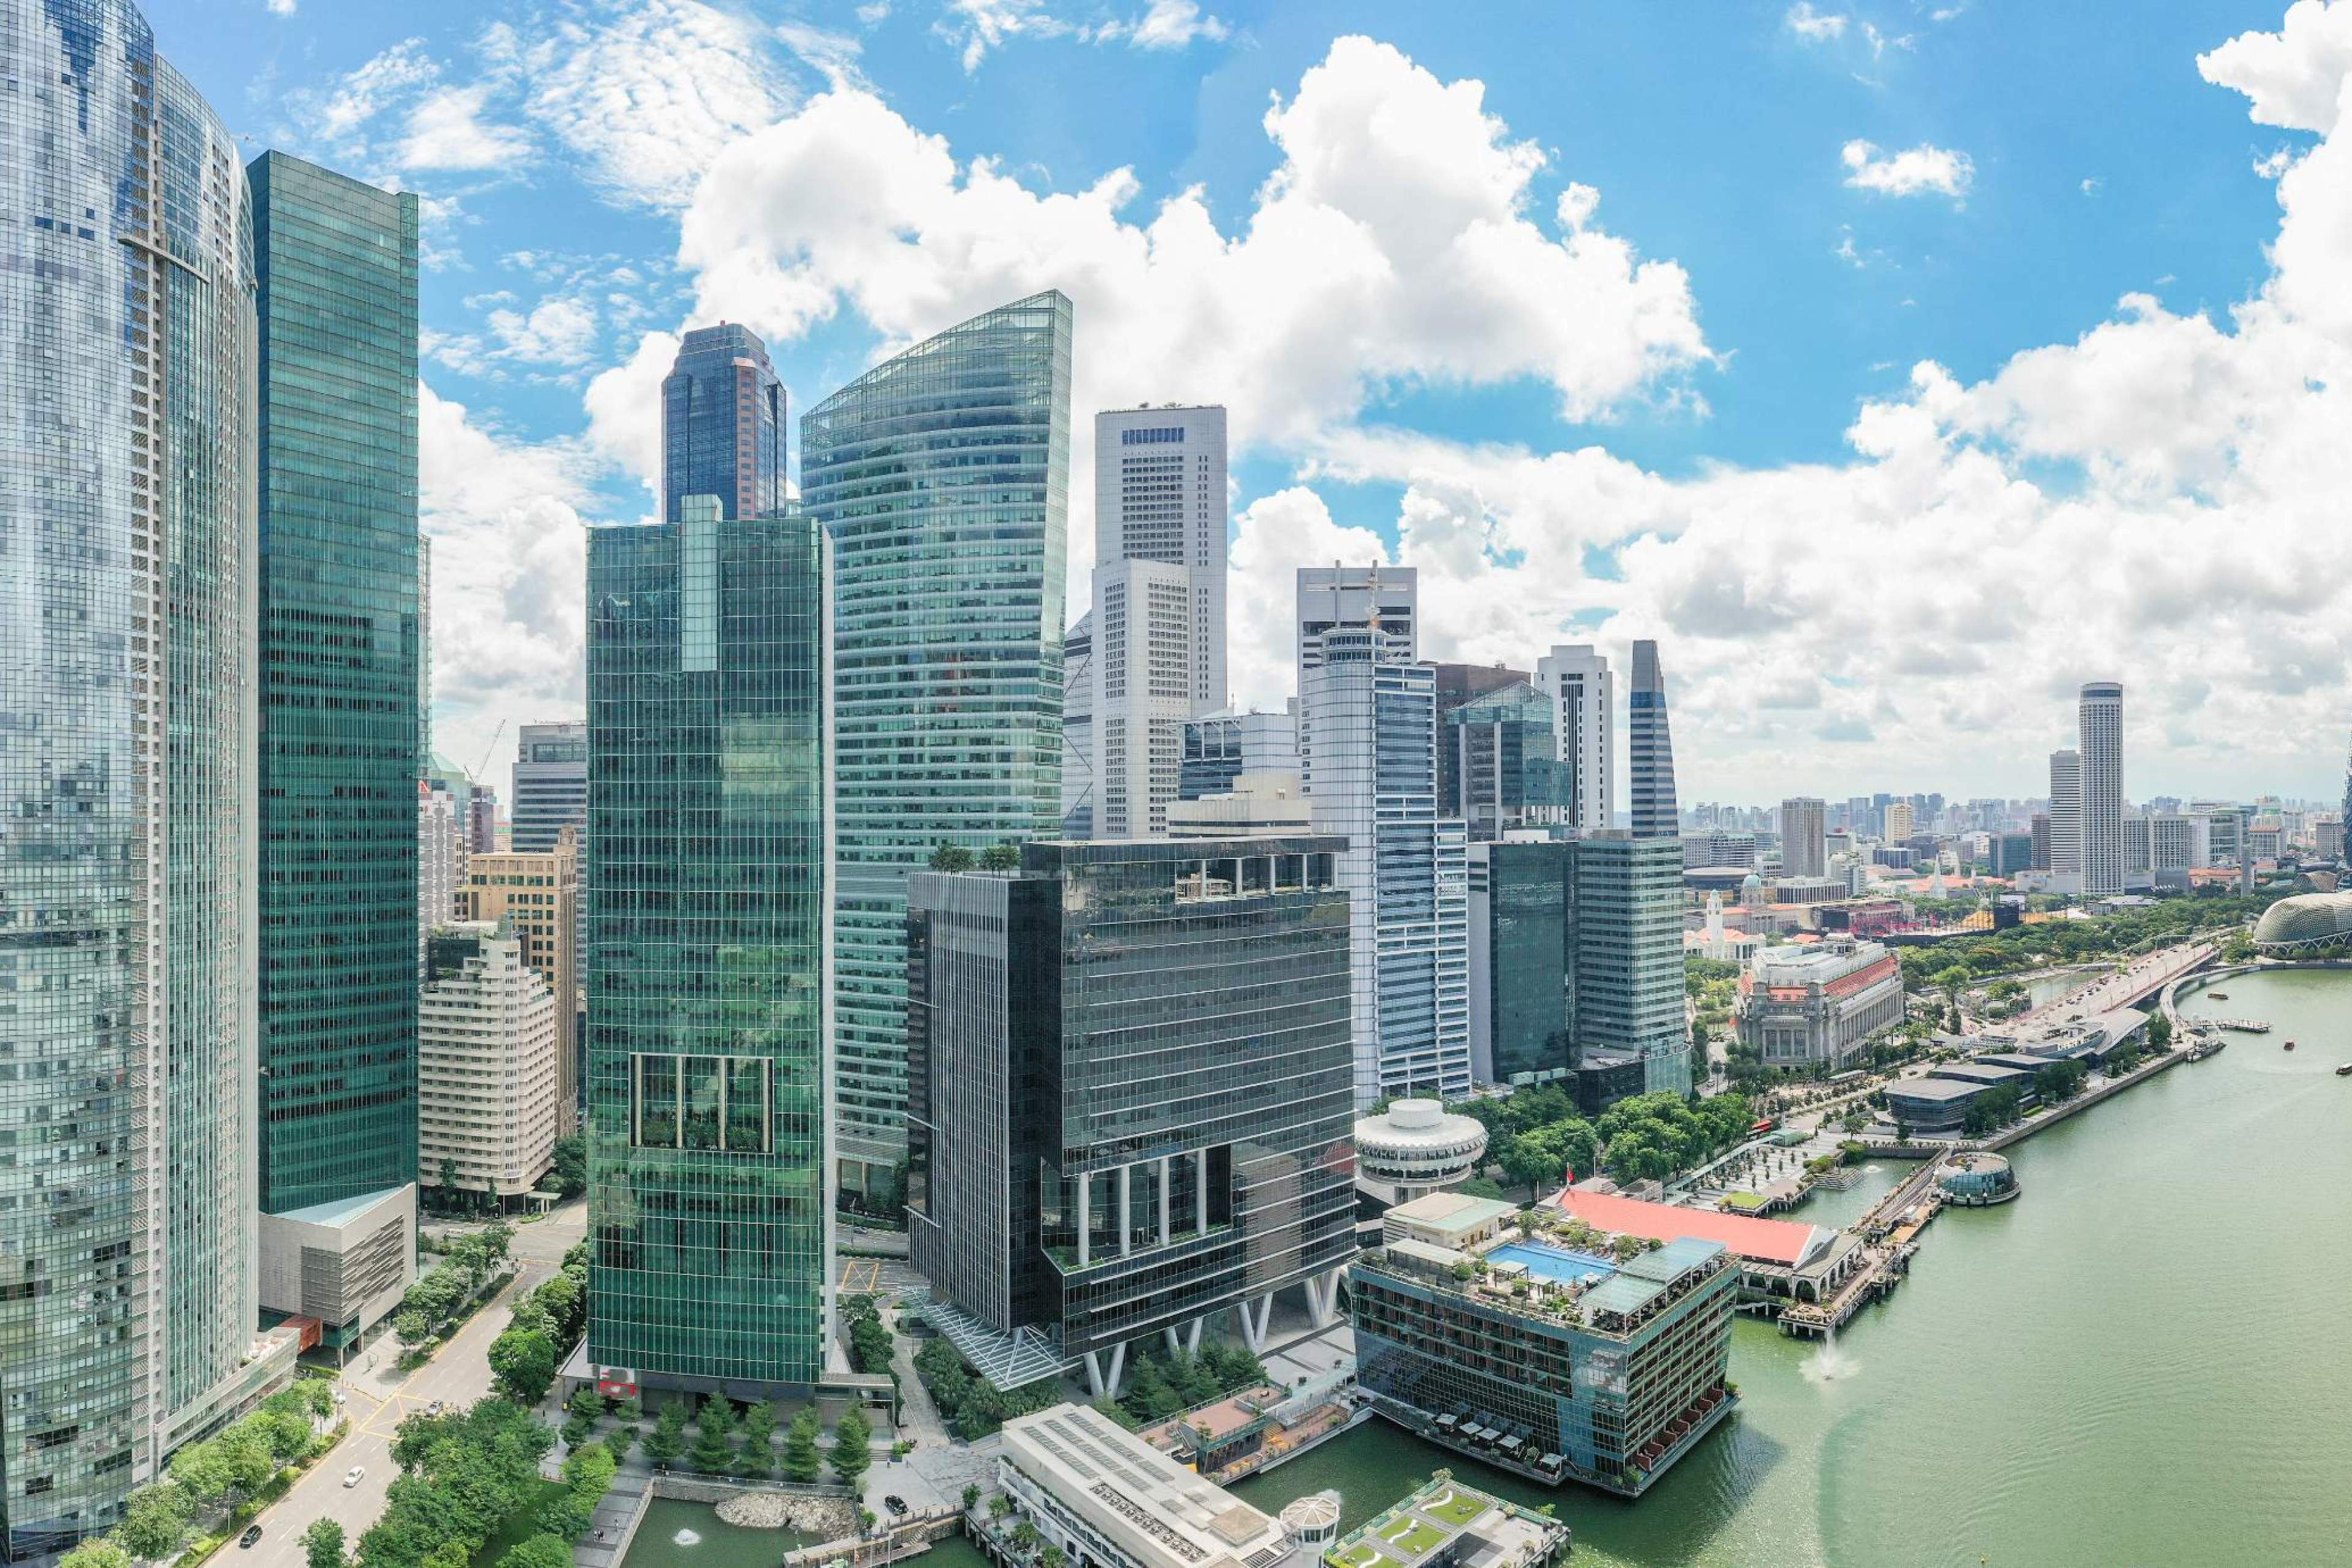 Aerial view of futuristic skyscrapers in Singapore